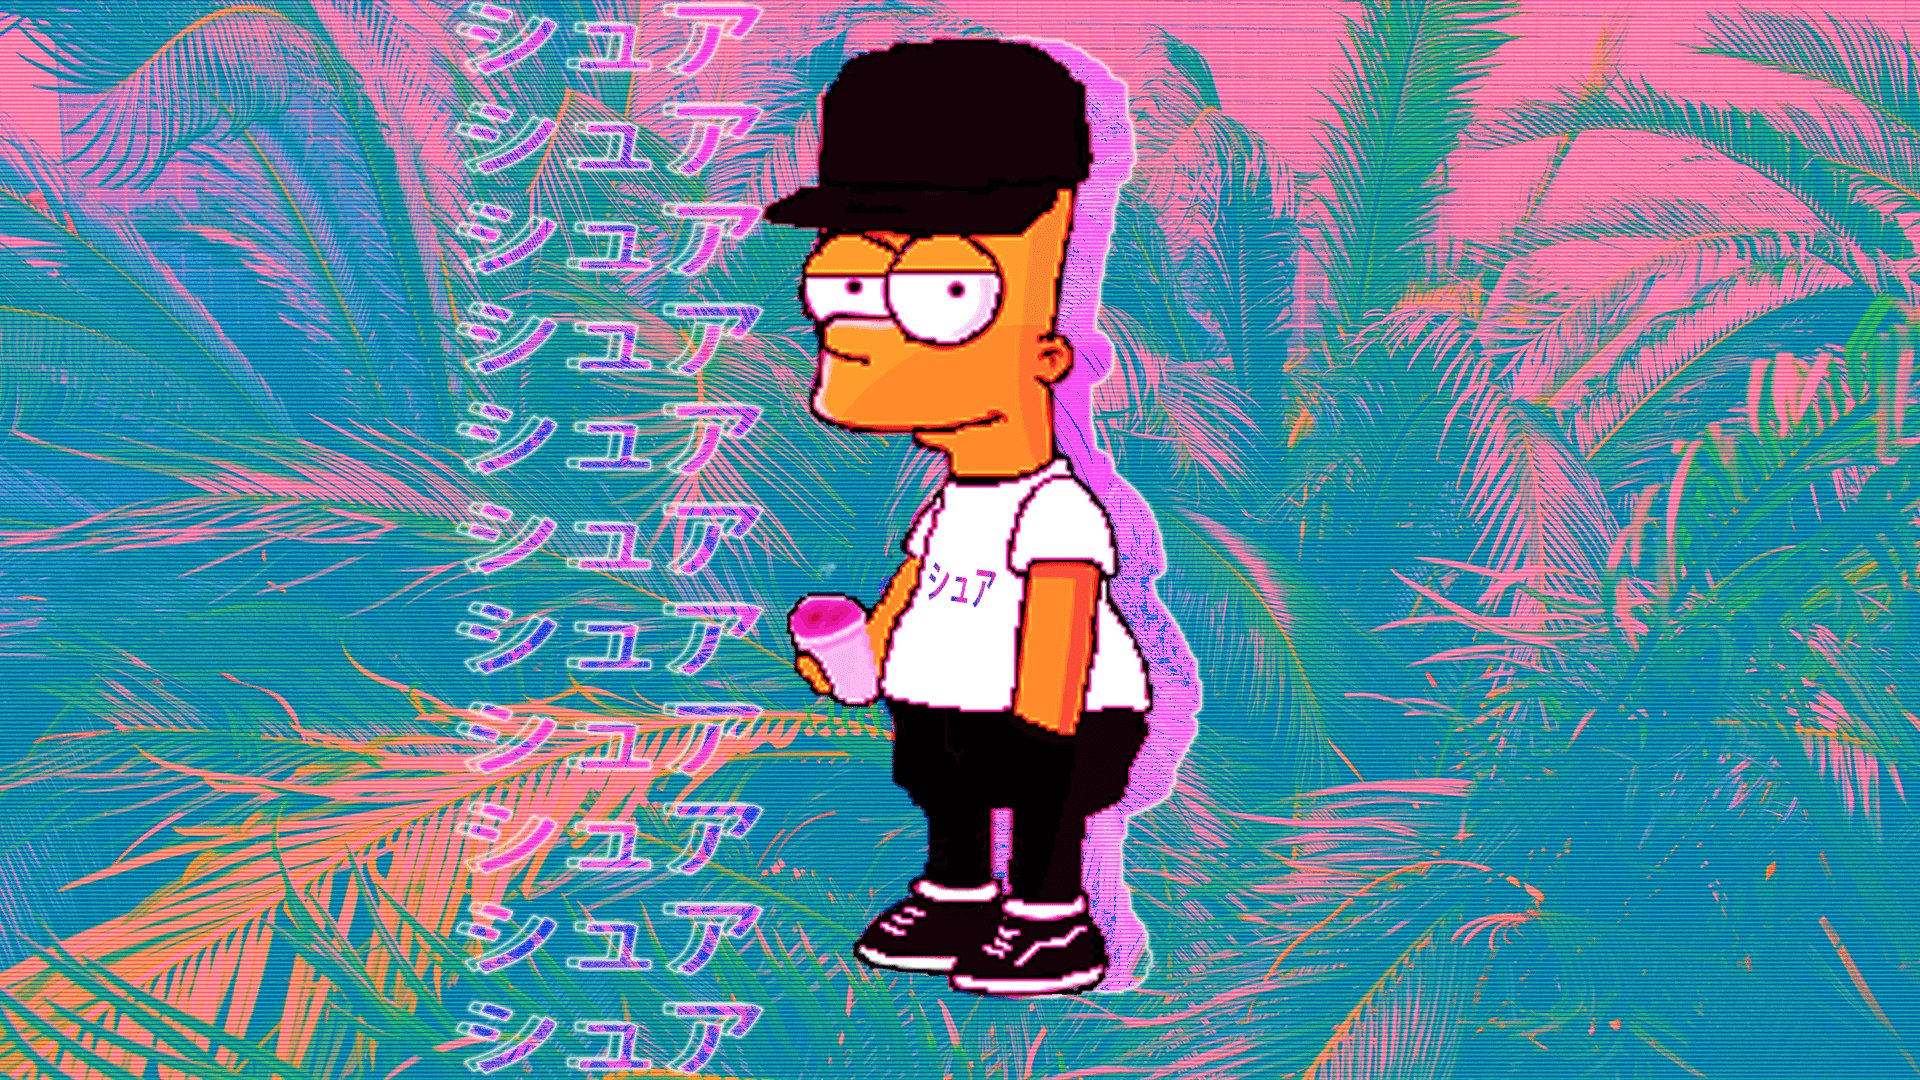 Bart Simpson Supreme Wallpapers - Wallpaper Cave